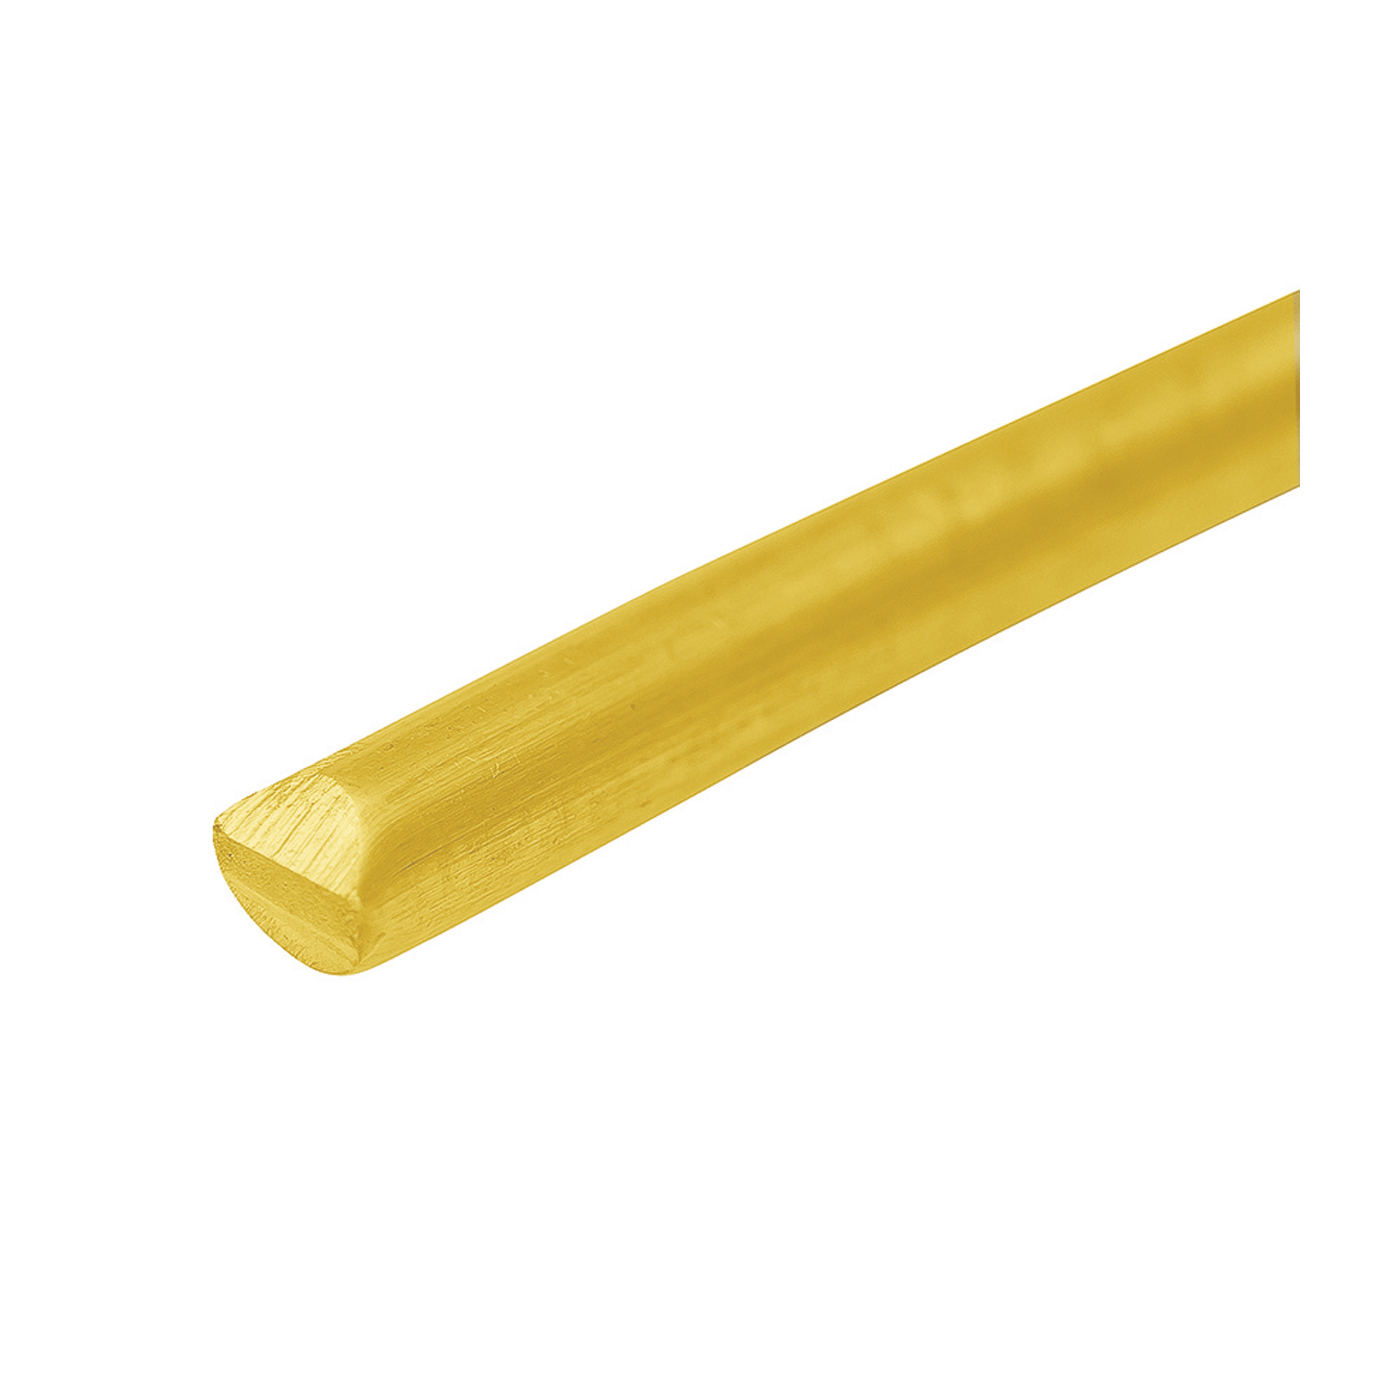 Round Wire, 750G/125 Deep Yellow, ø 1 mm, Length 15 cm - 1 piece